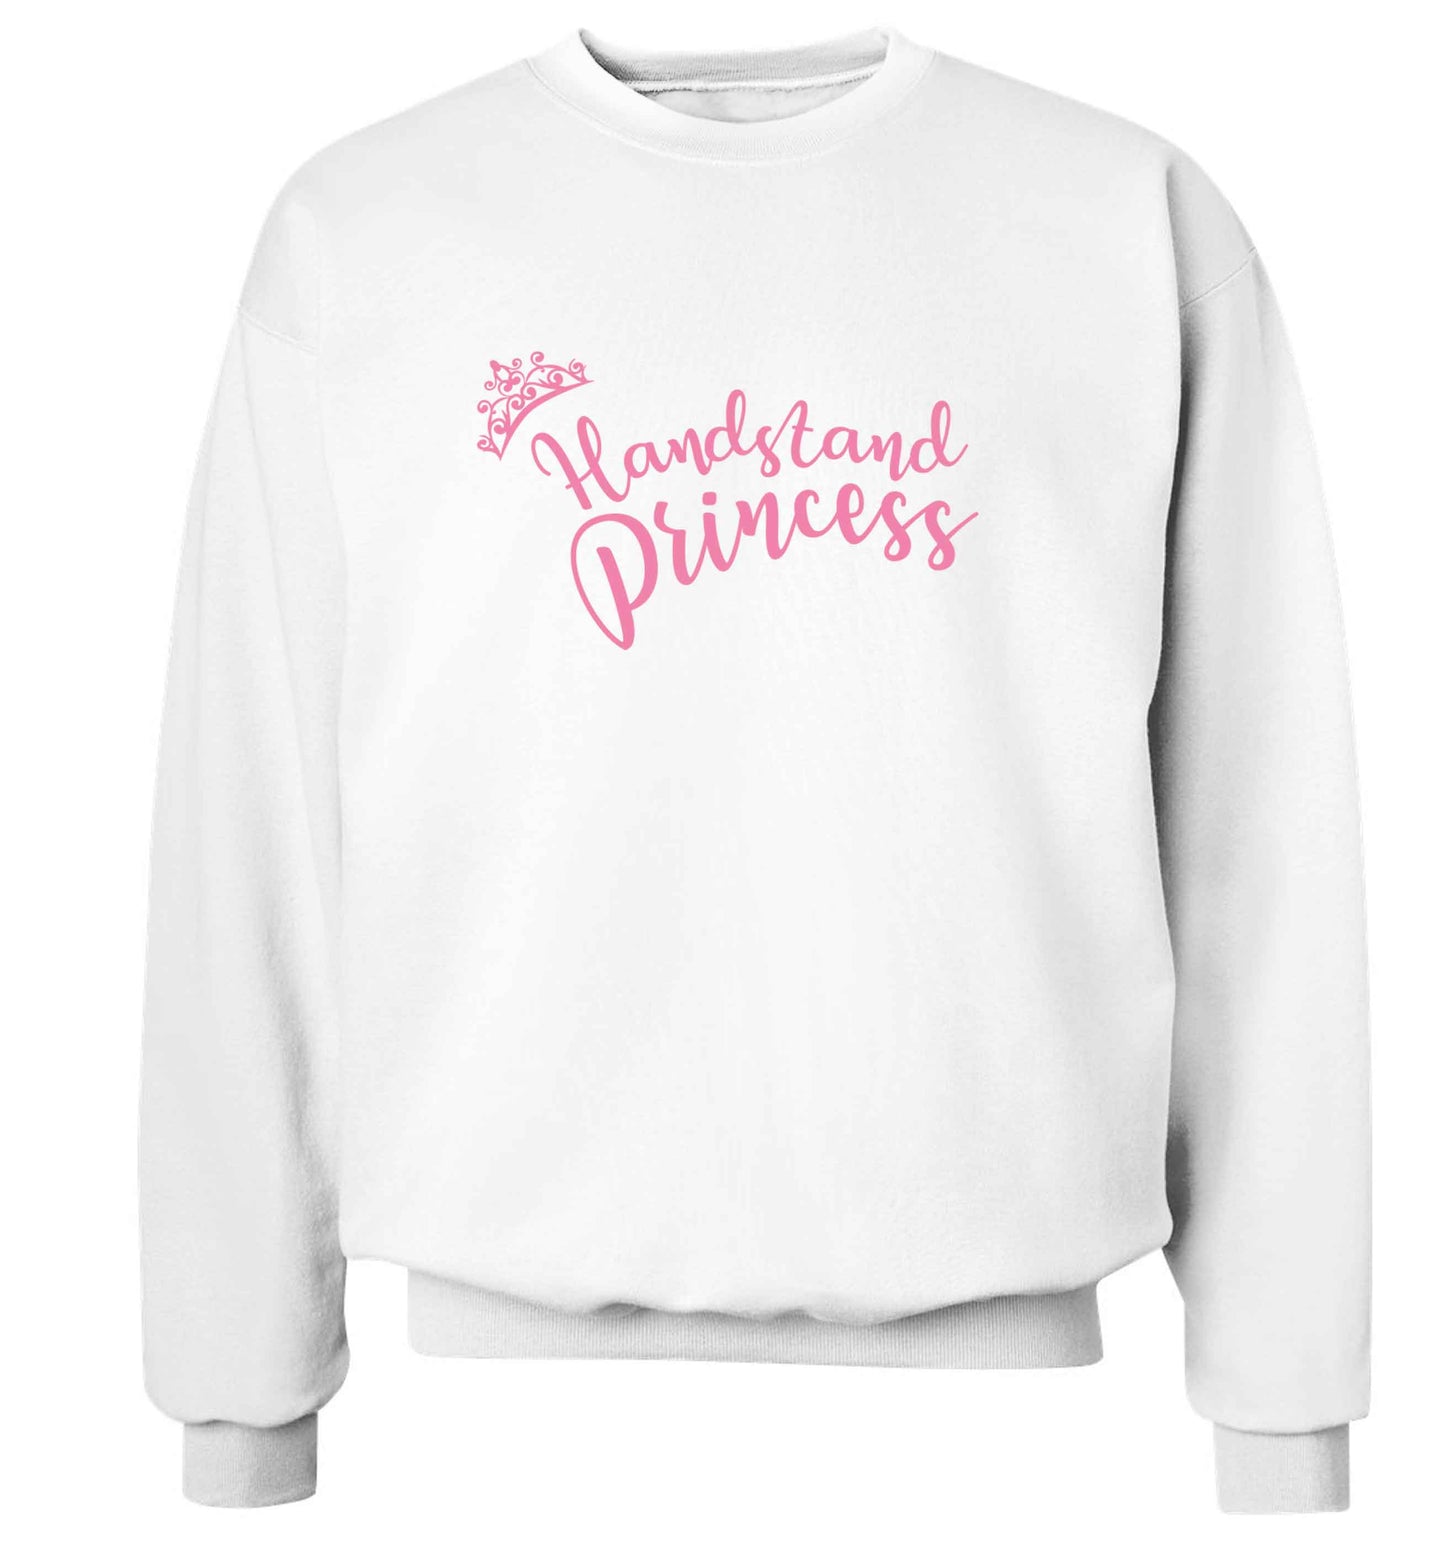 Handstand princess Adult's unisex white Sweater 2XL